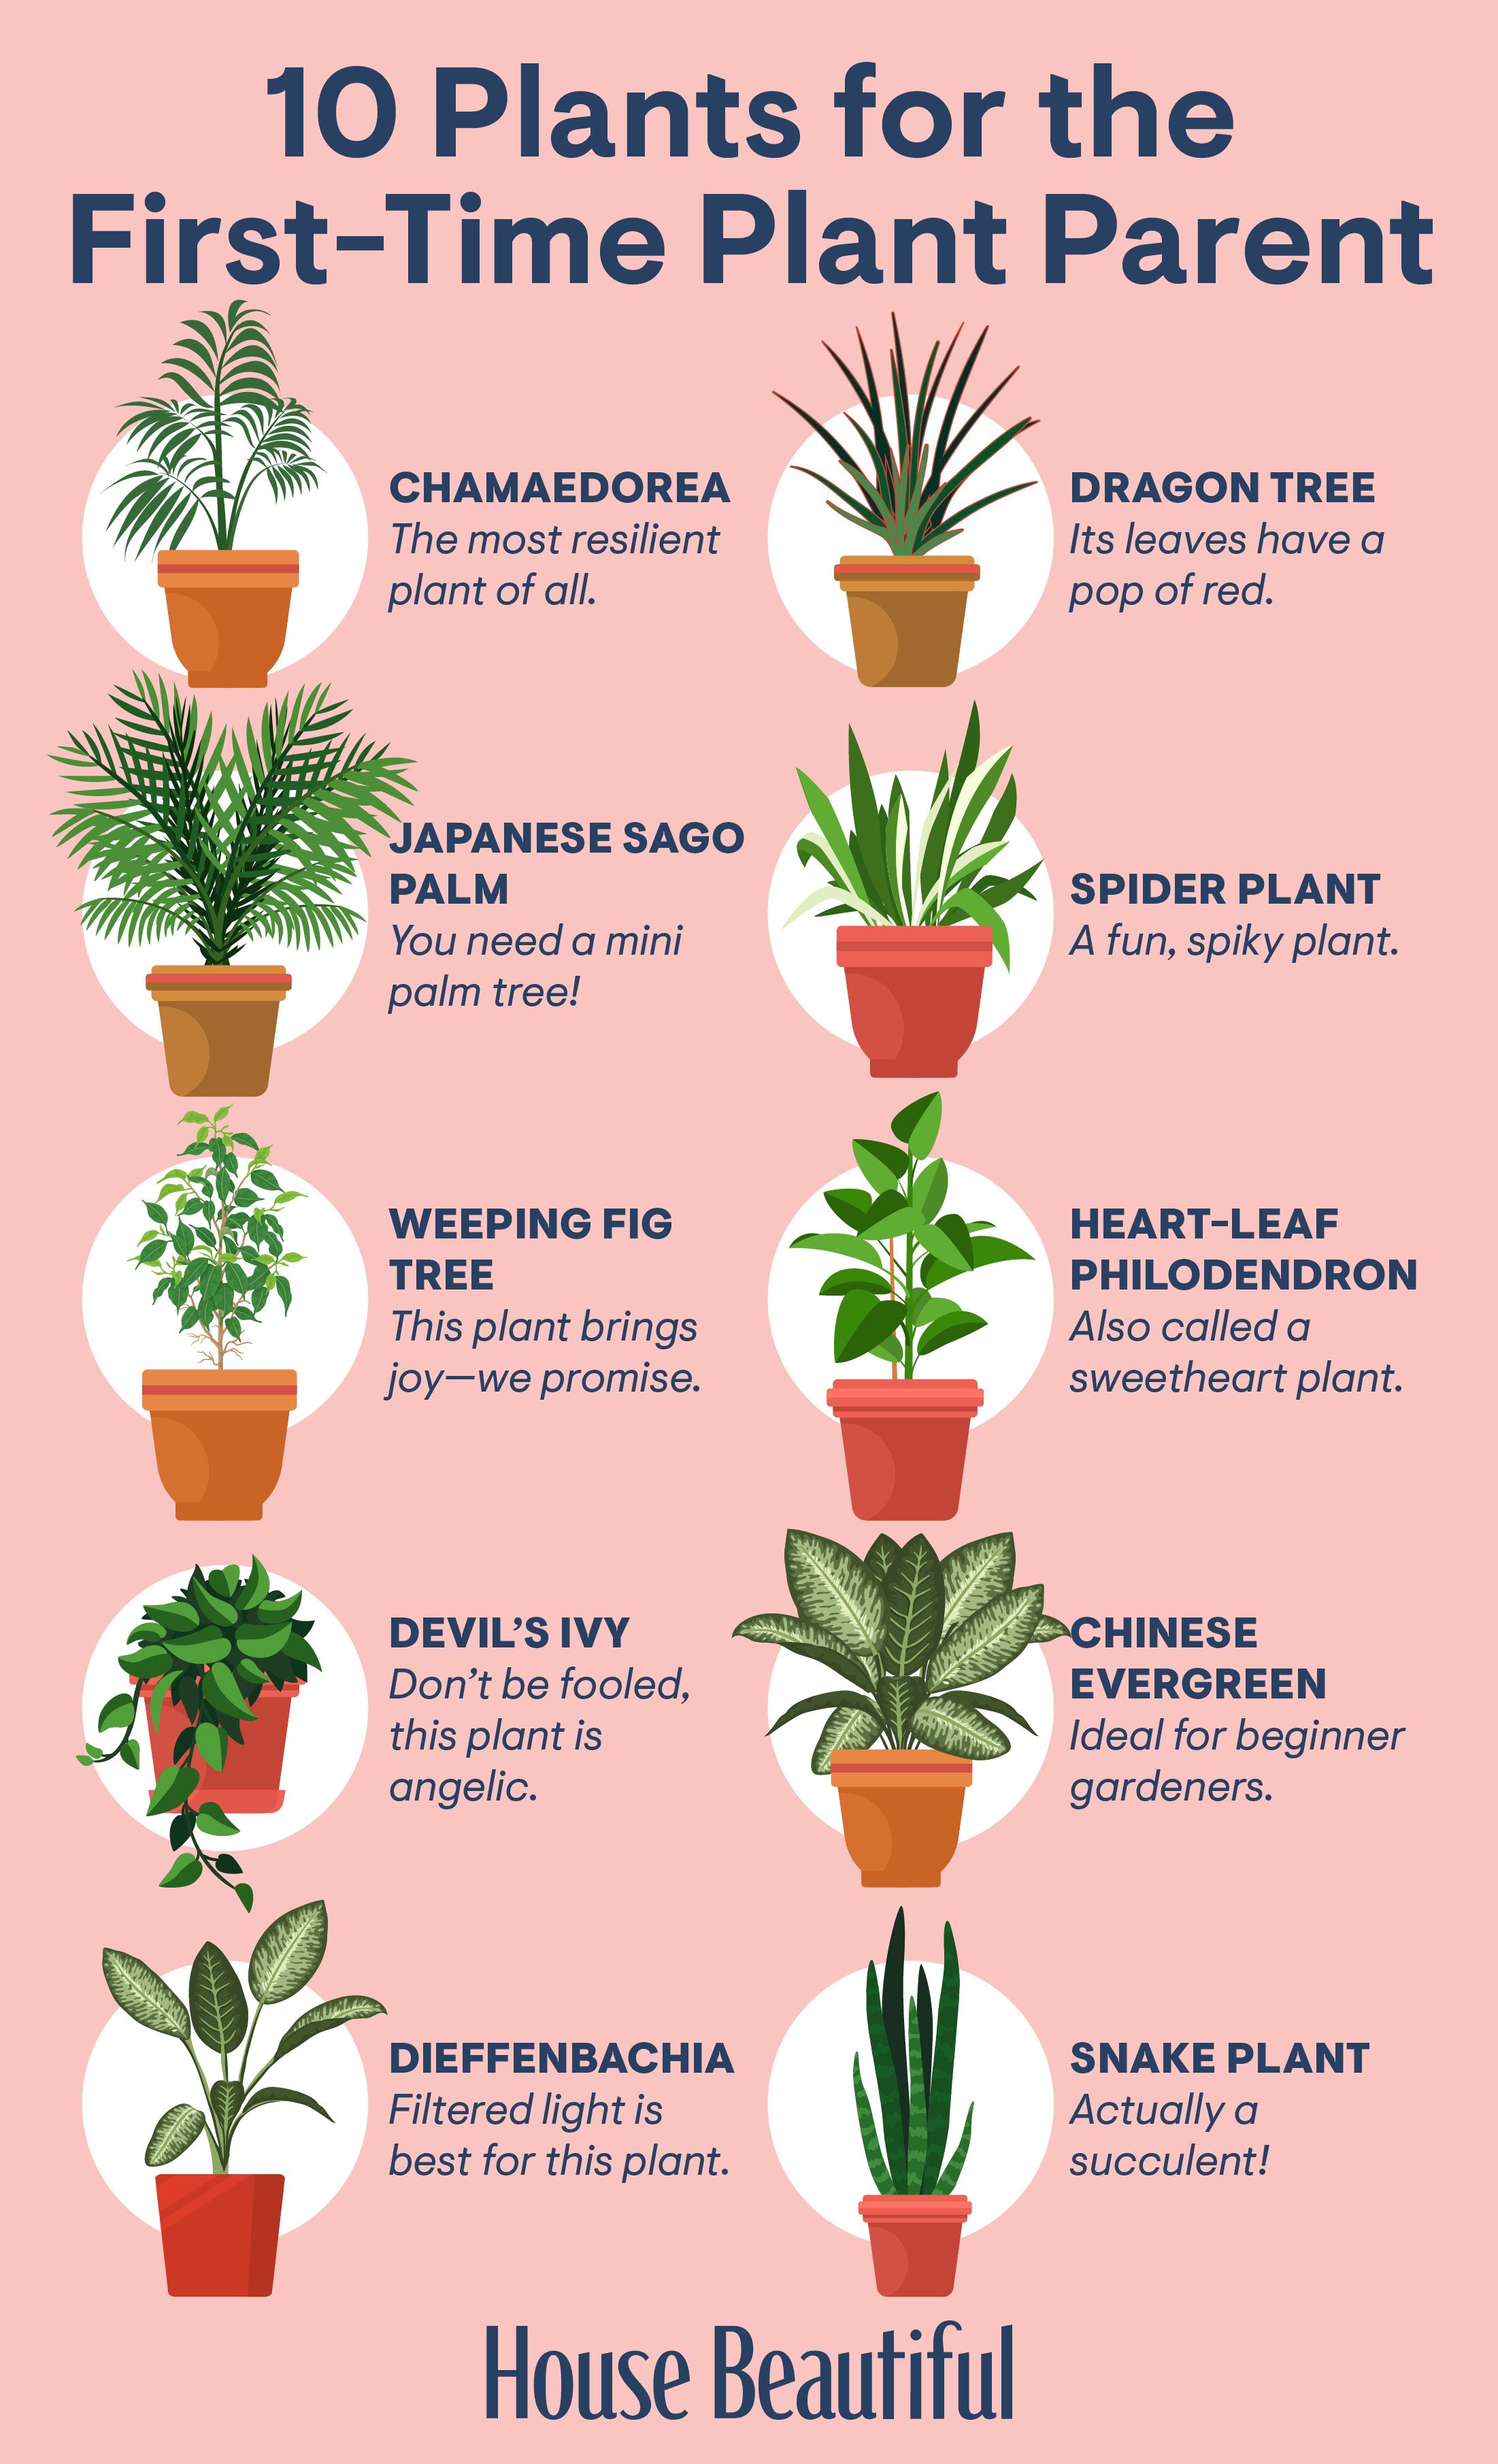 plants 4 home